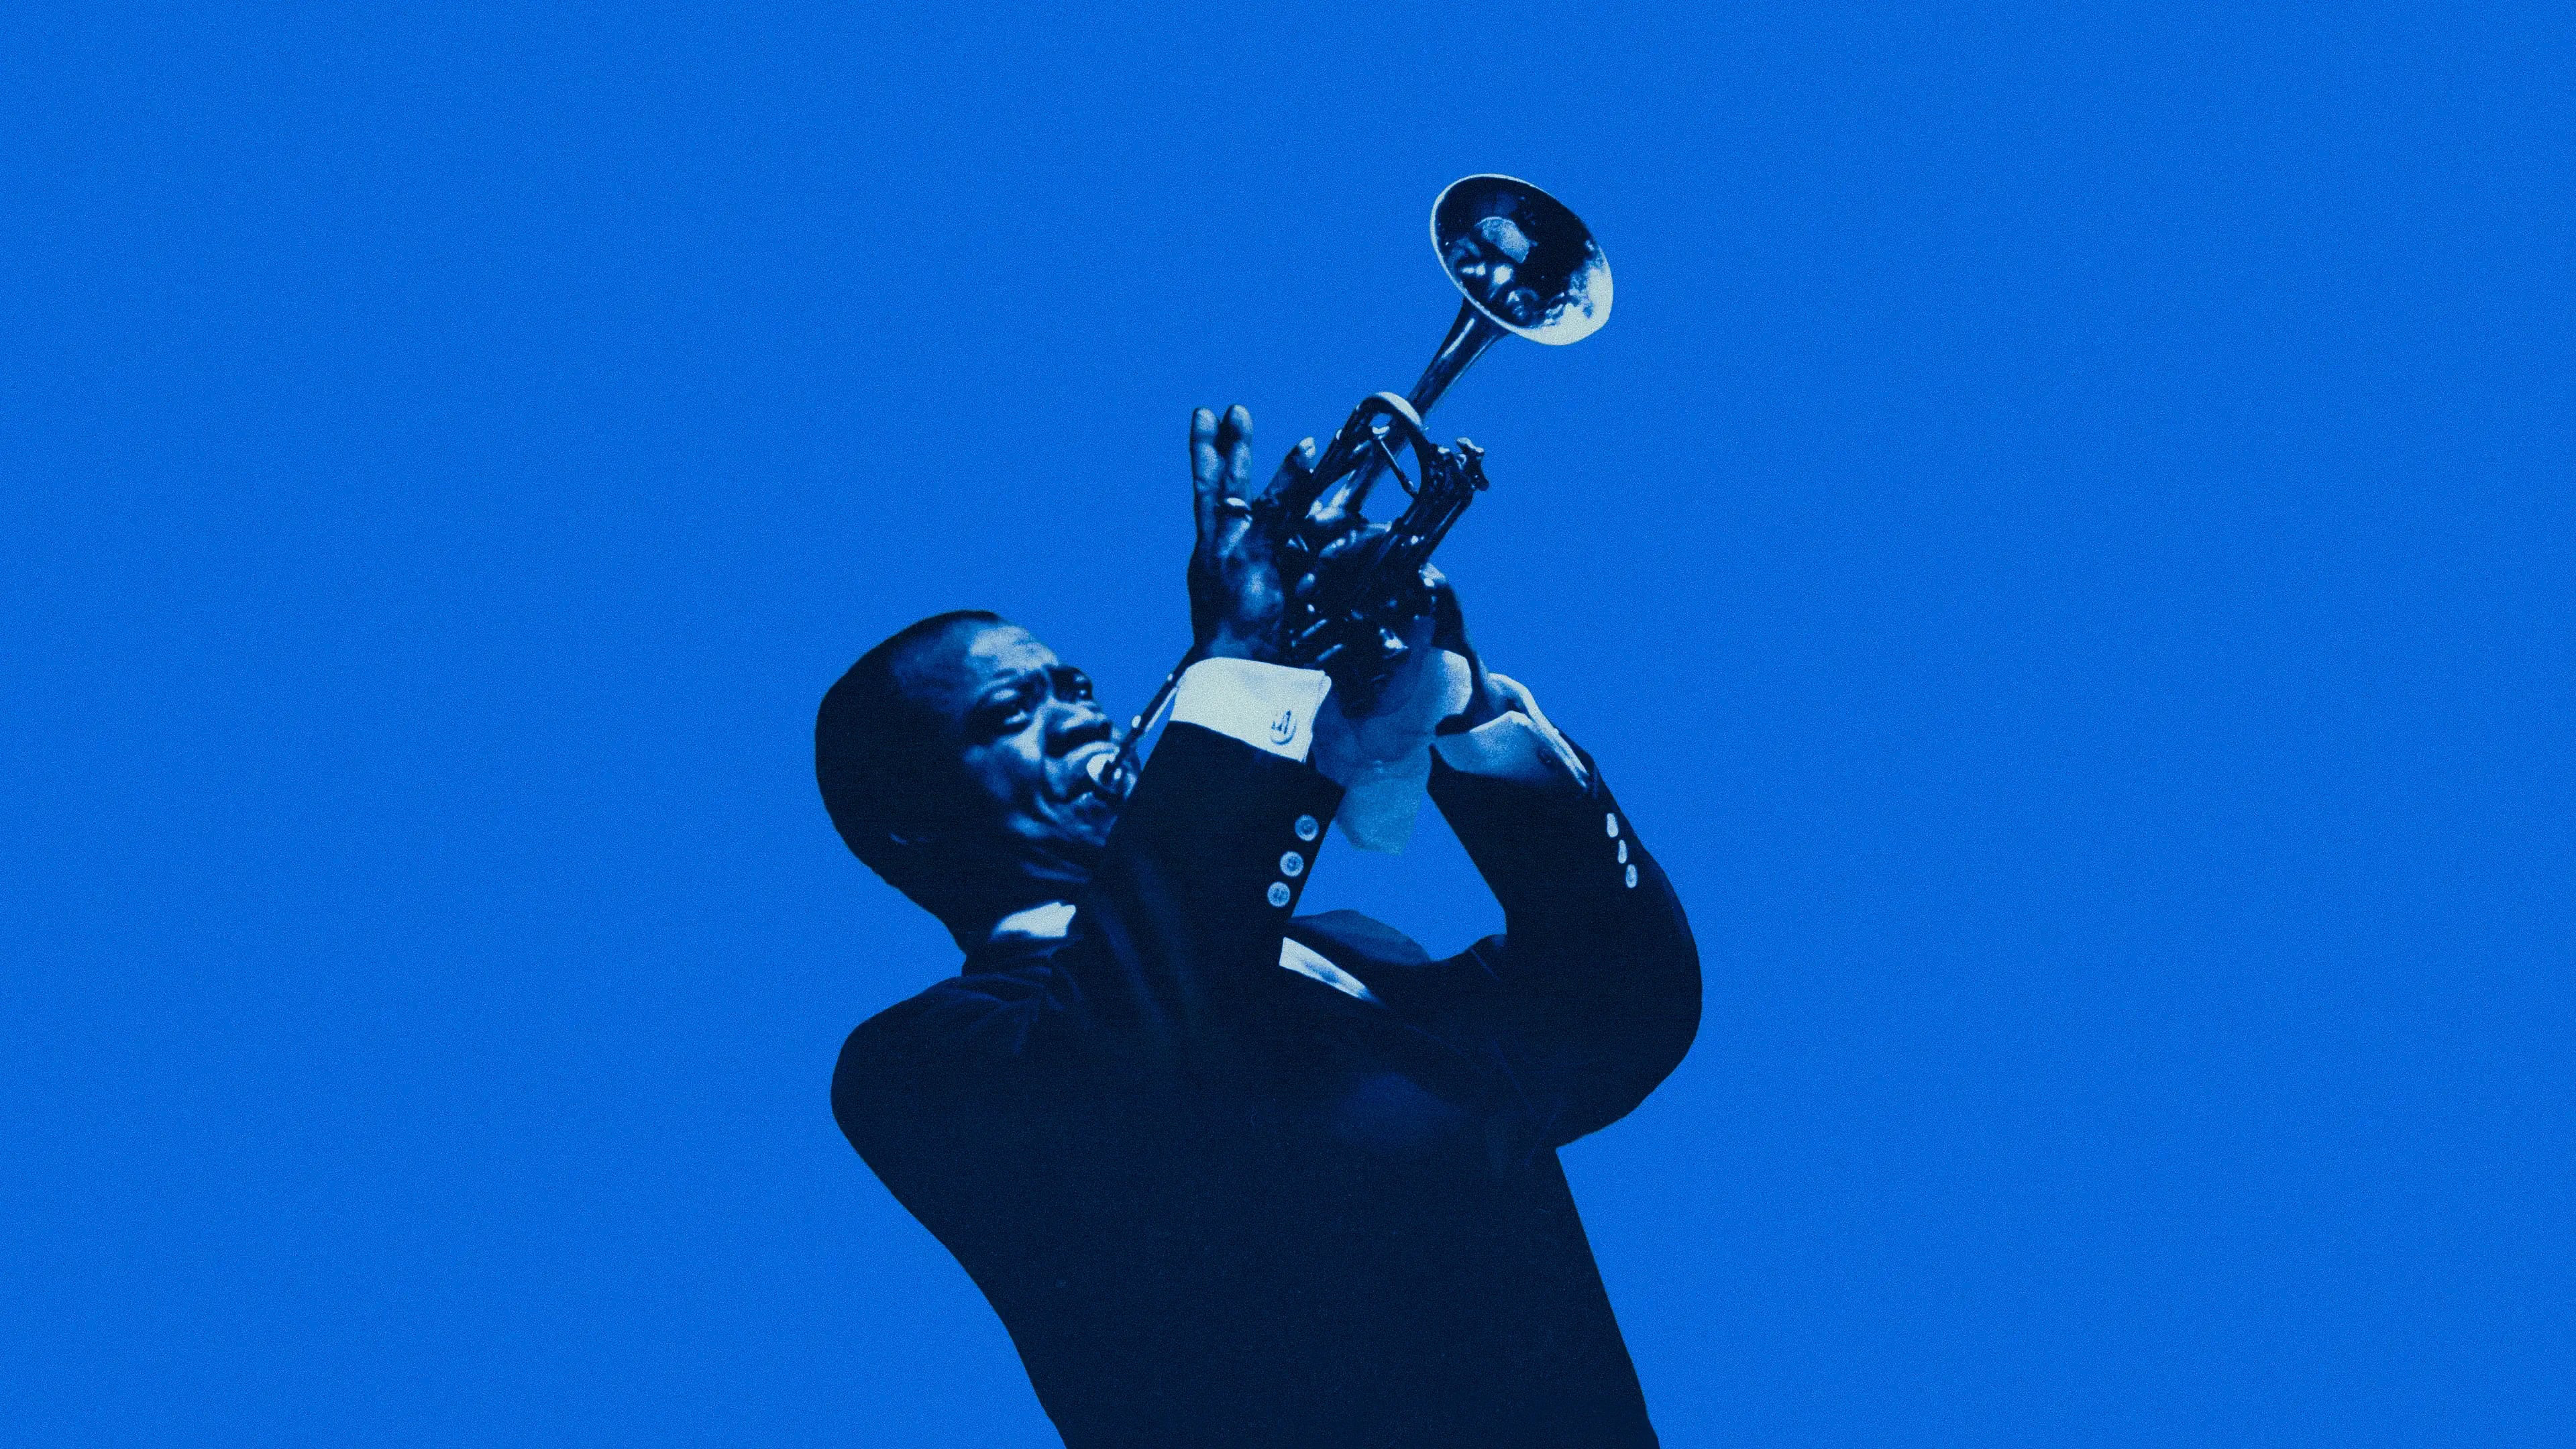 Poster Phim Jazz và Cuộc Đời của Louis Armstrong (Louis Armstrong's Black & Blues)